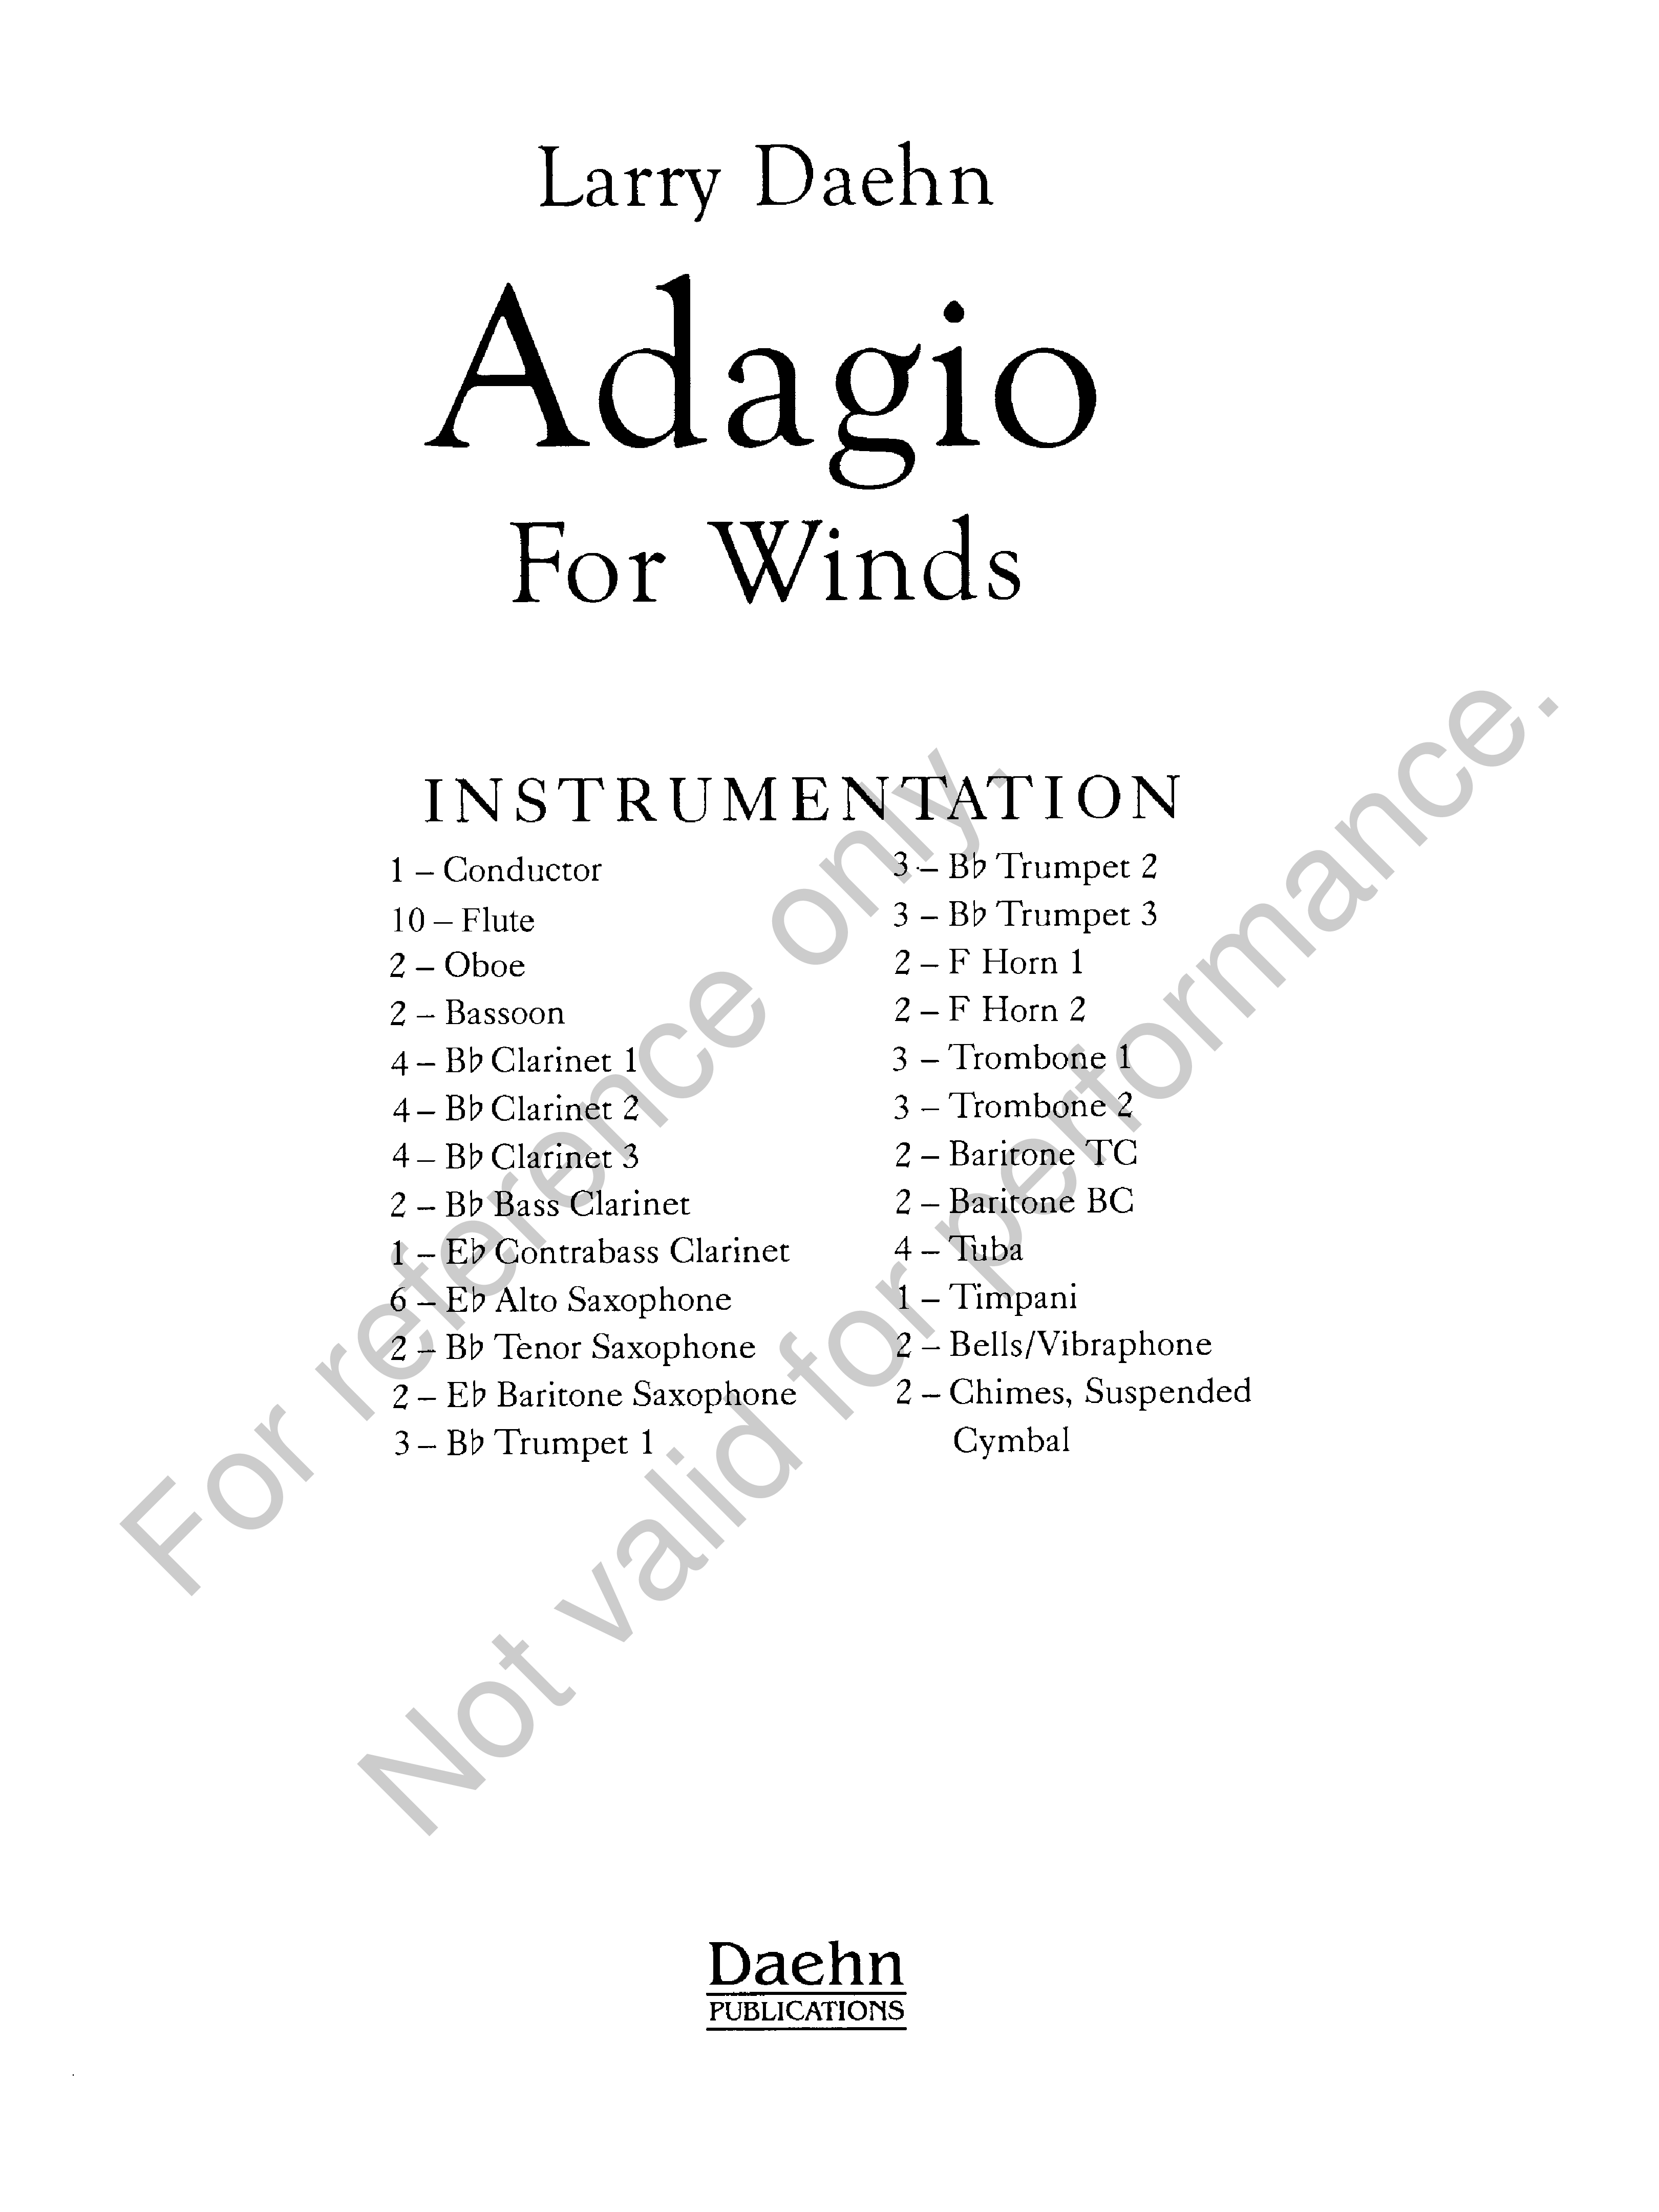 ADAGIO FOR WINDS